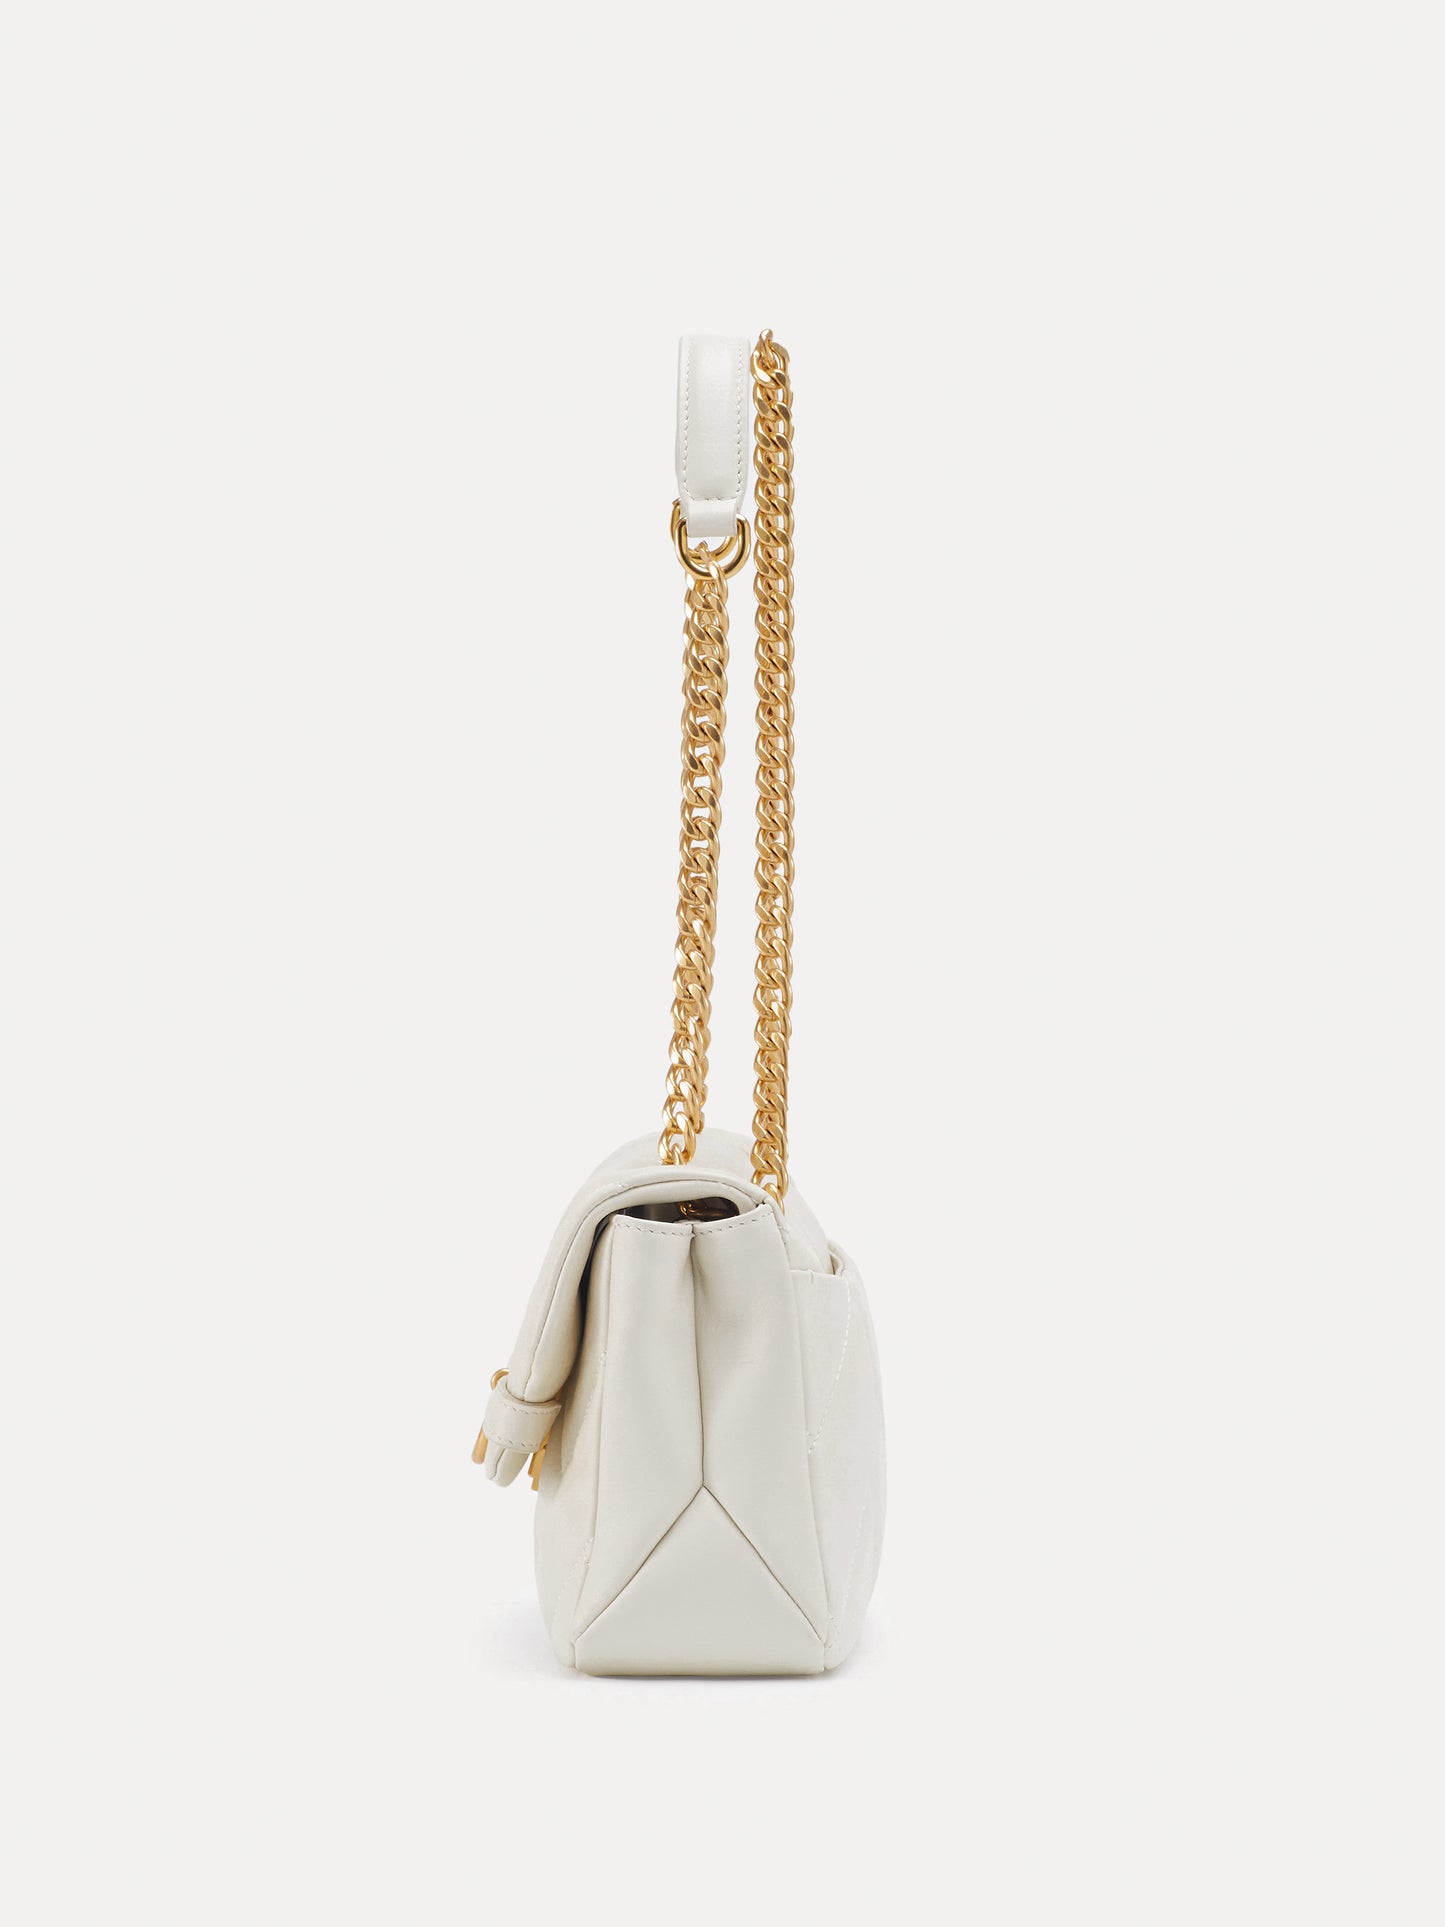 Unlocked Pillow Bag in Cream | Parisa Wang